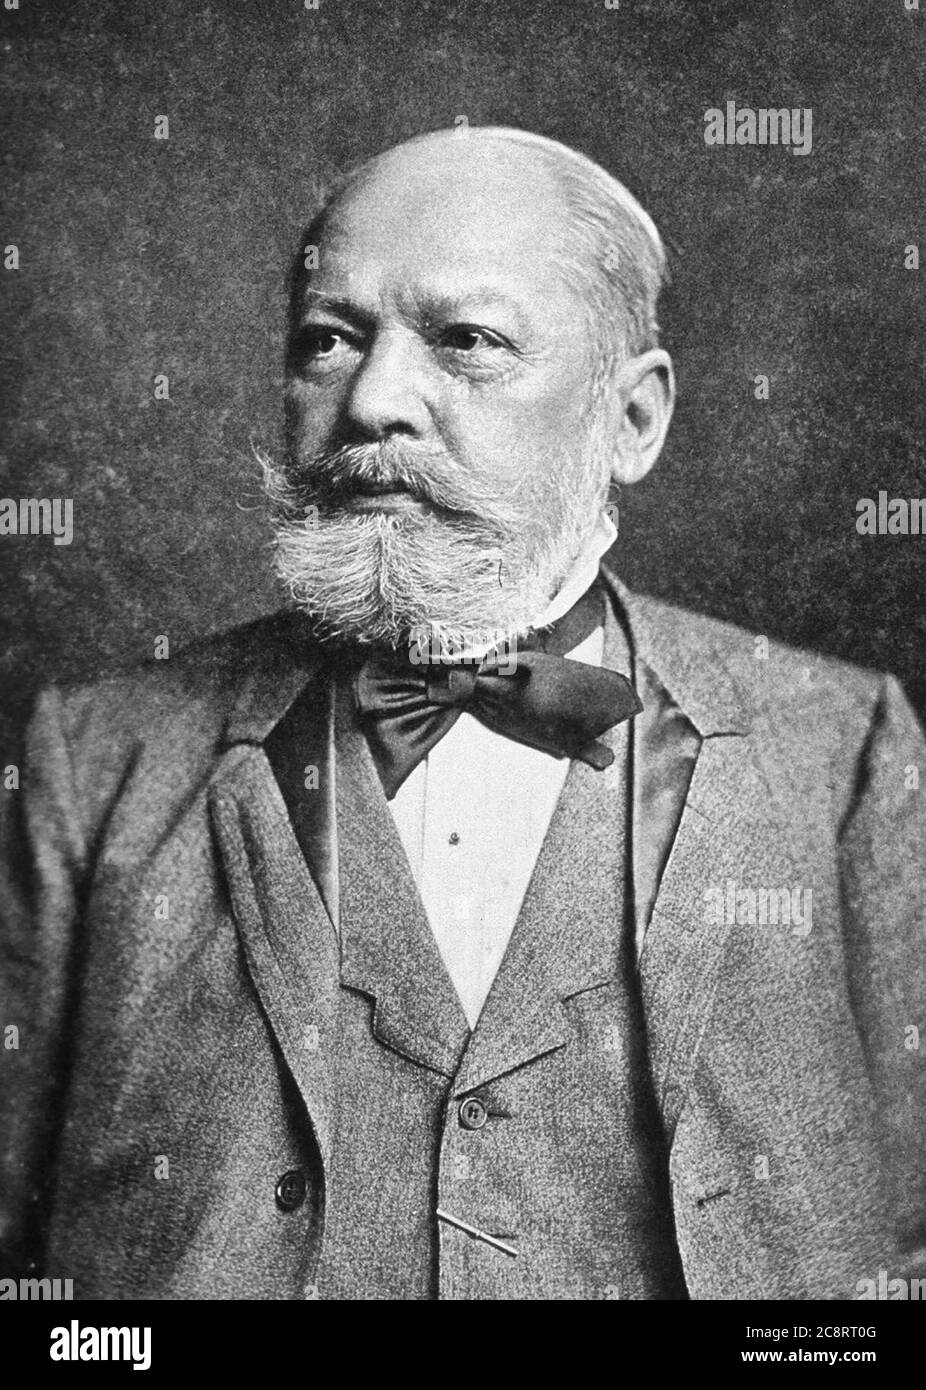 Carl Jakob Adolf Christian Gerhardt (5. Mai 1833 - 22. Juli 1902) - Arzt und Praktiker Stockfoto